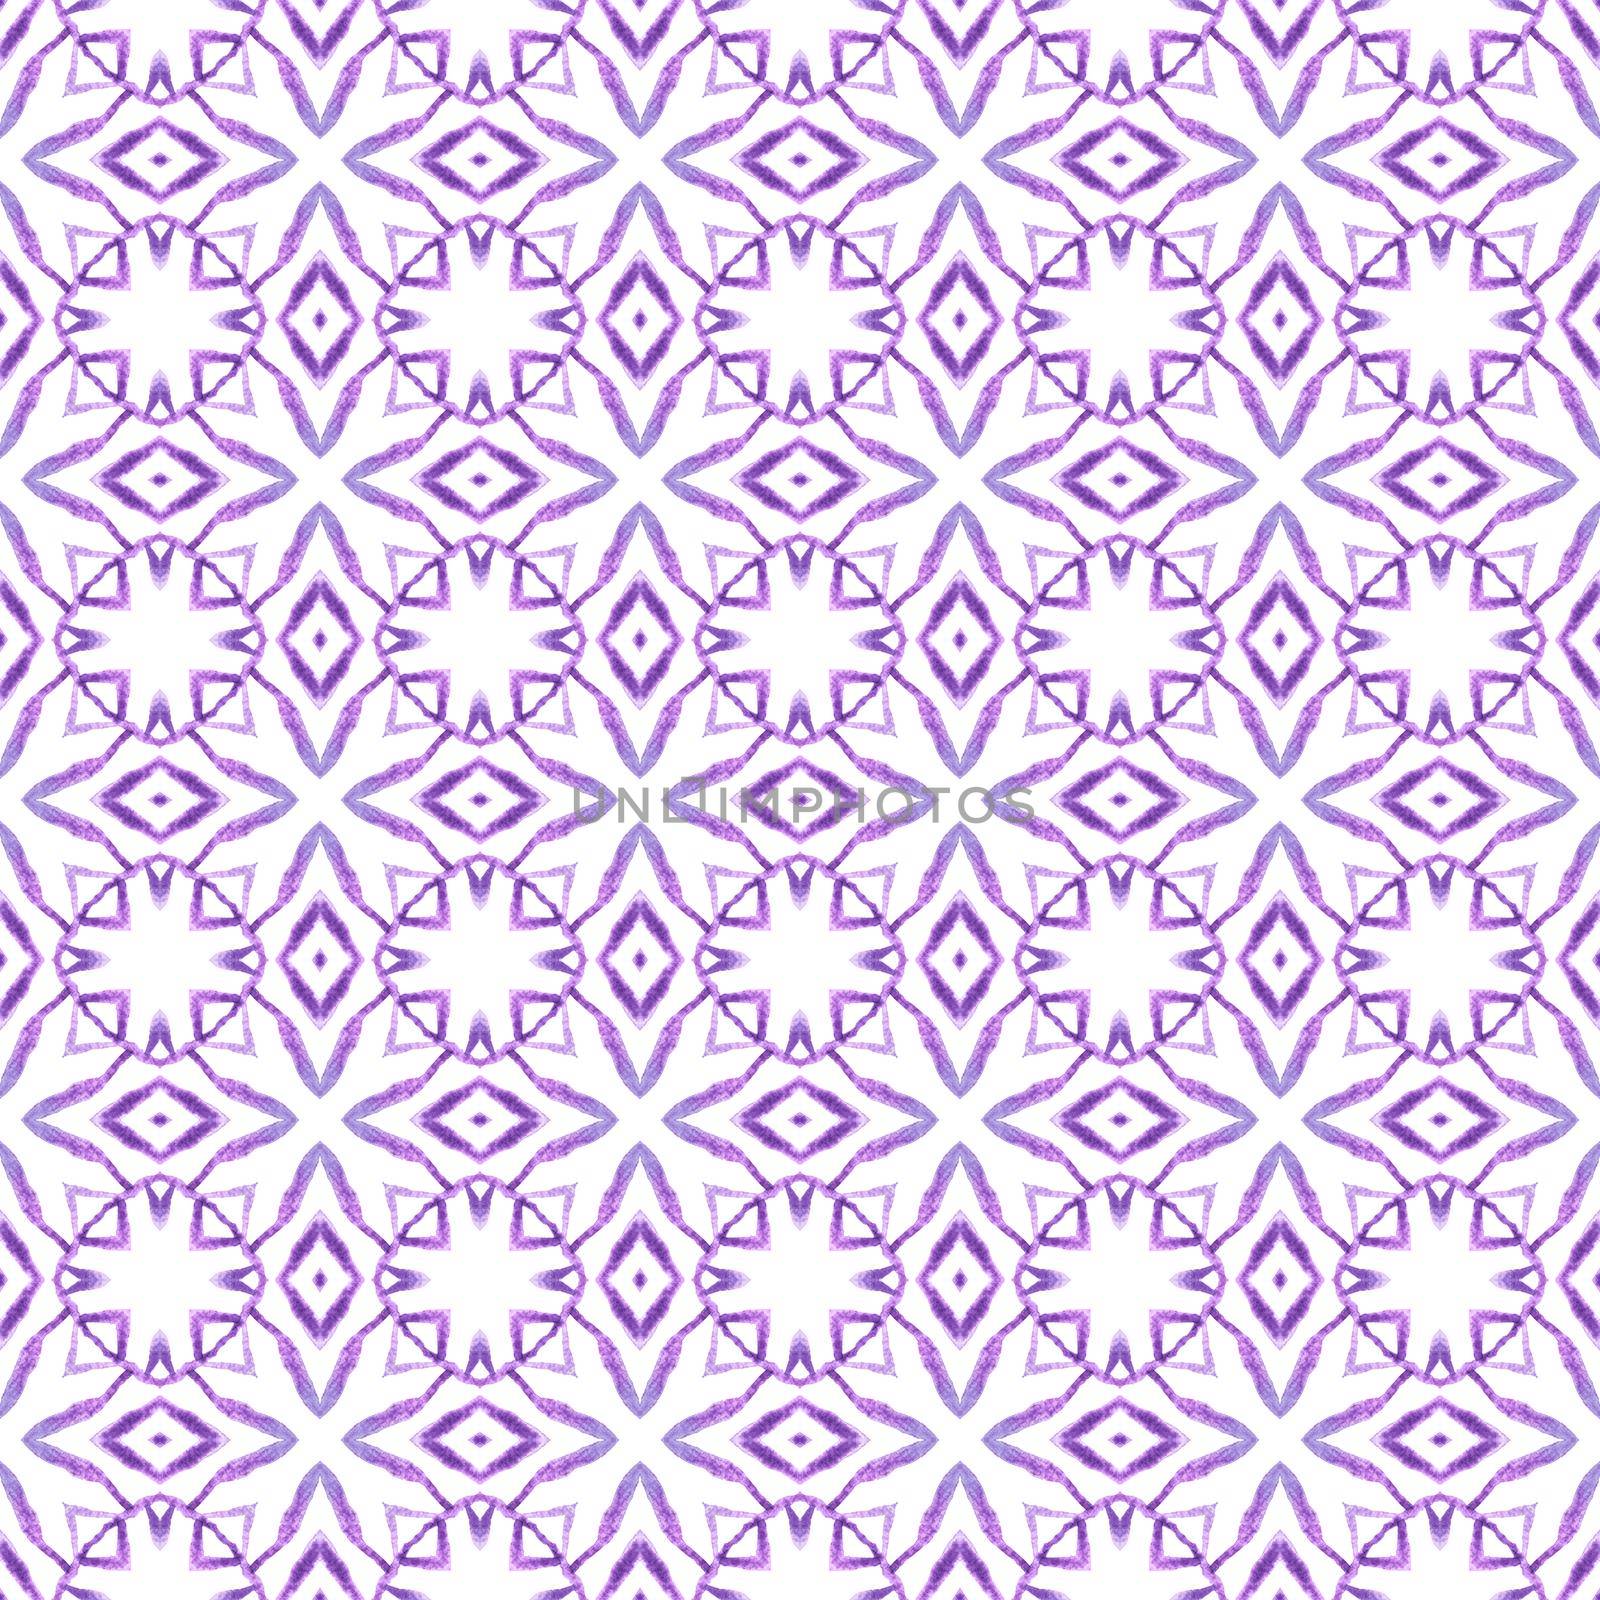 Textile ready precious print, swimwear fabric, wallpaper, wrapping. Purple memorable boho chic summer design. Repeating striped hand drawn border. Striped hand drawn design.